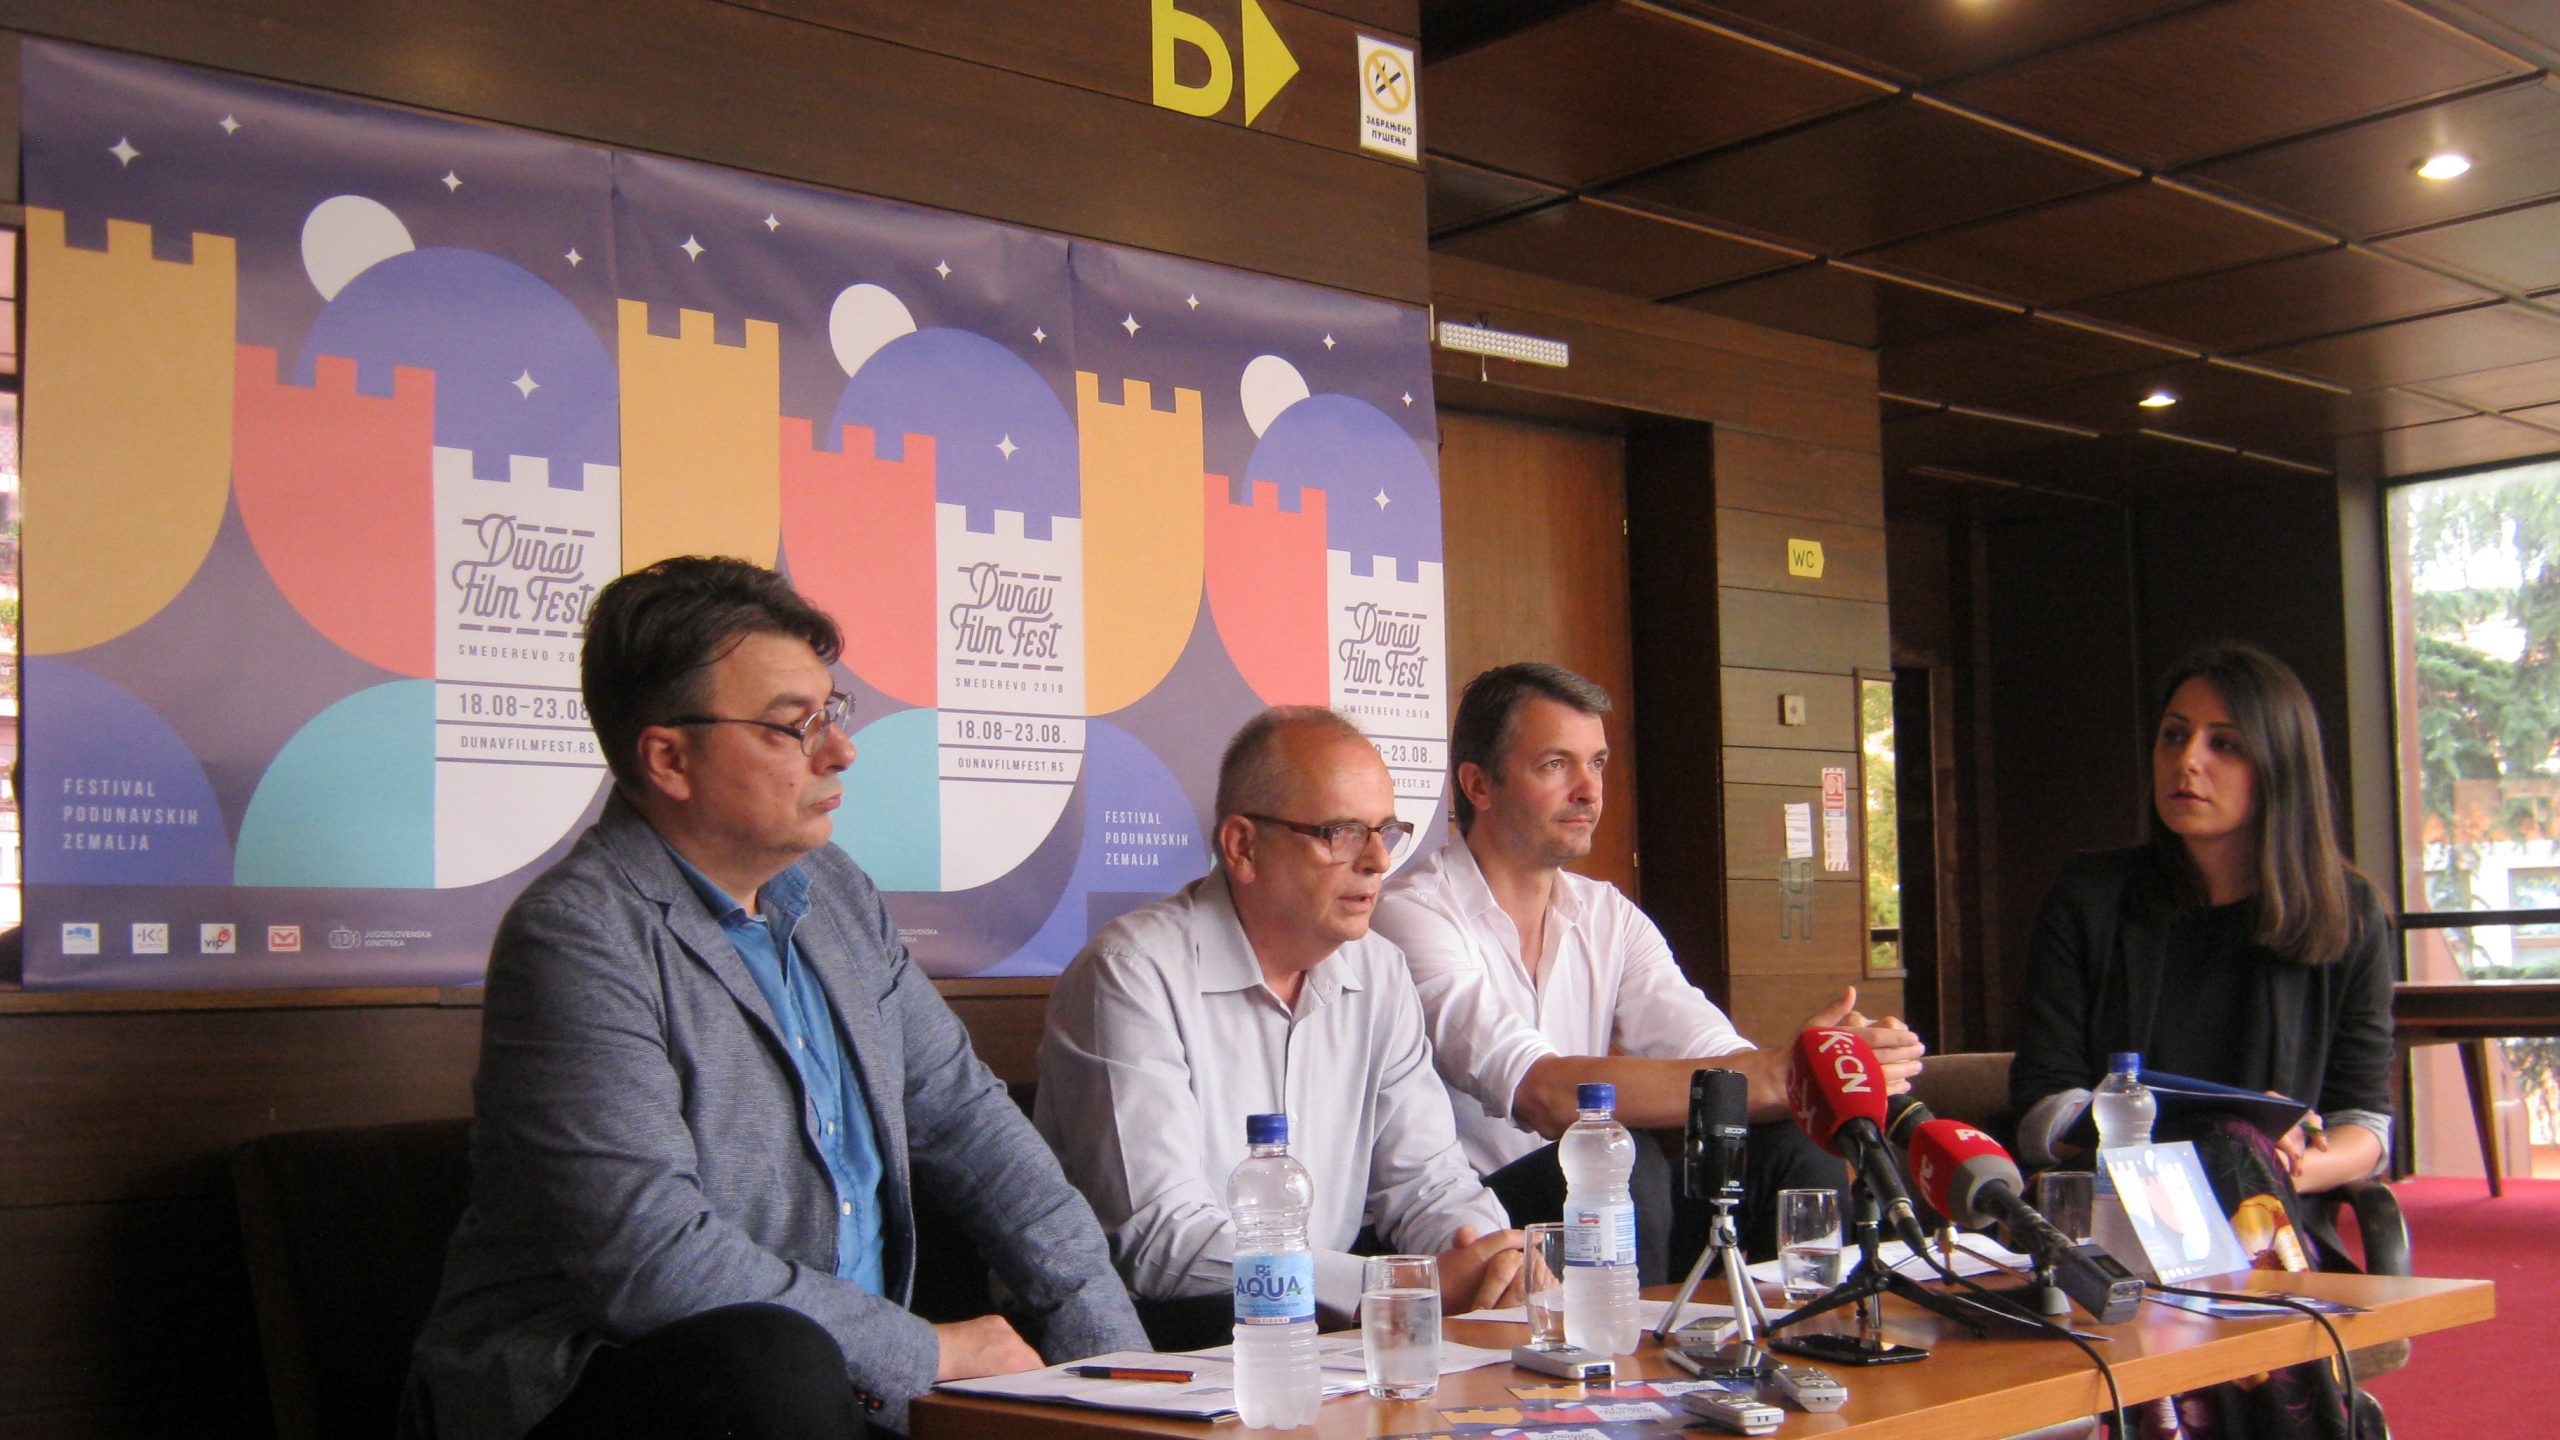 Dunav film festival – Smederevo 2018, od 18. do 23. avgusta 1